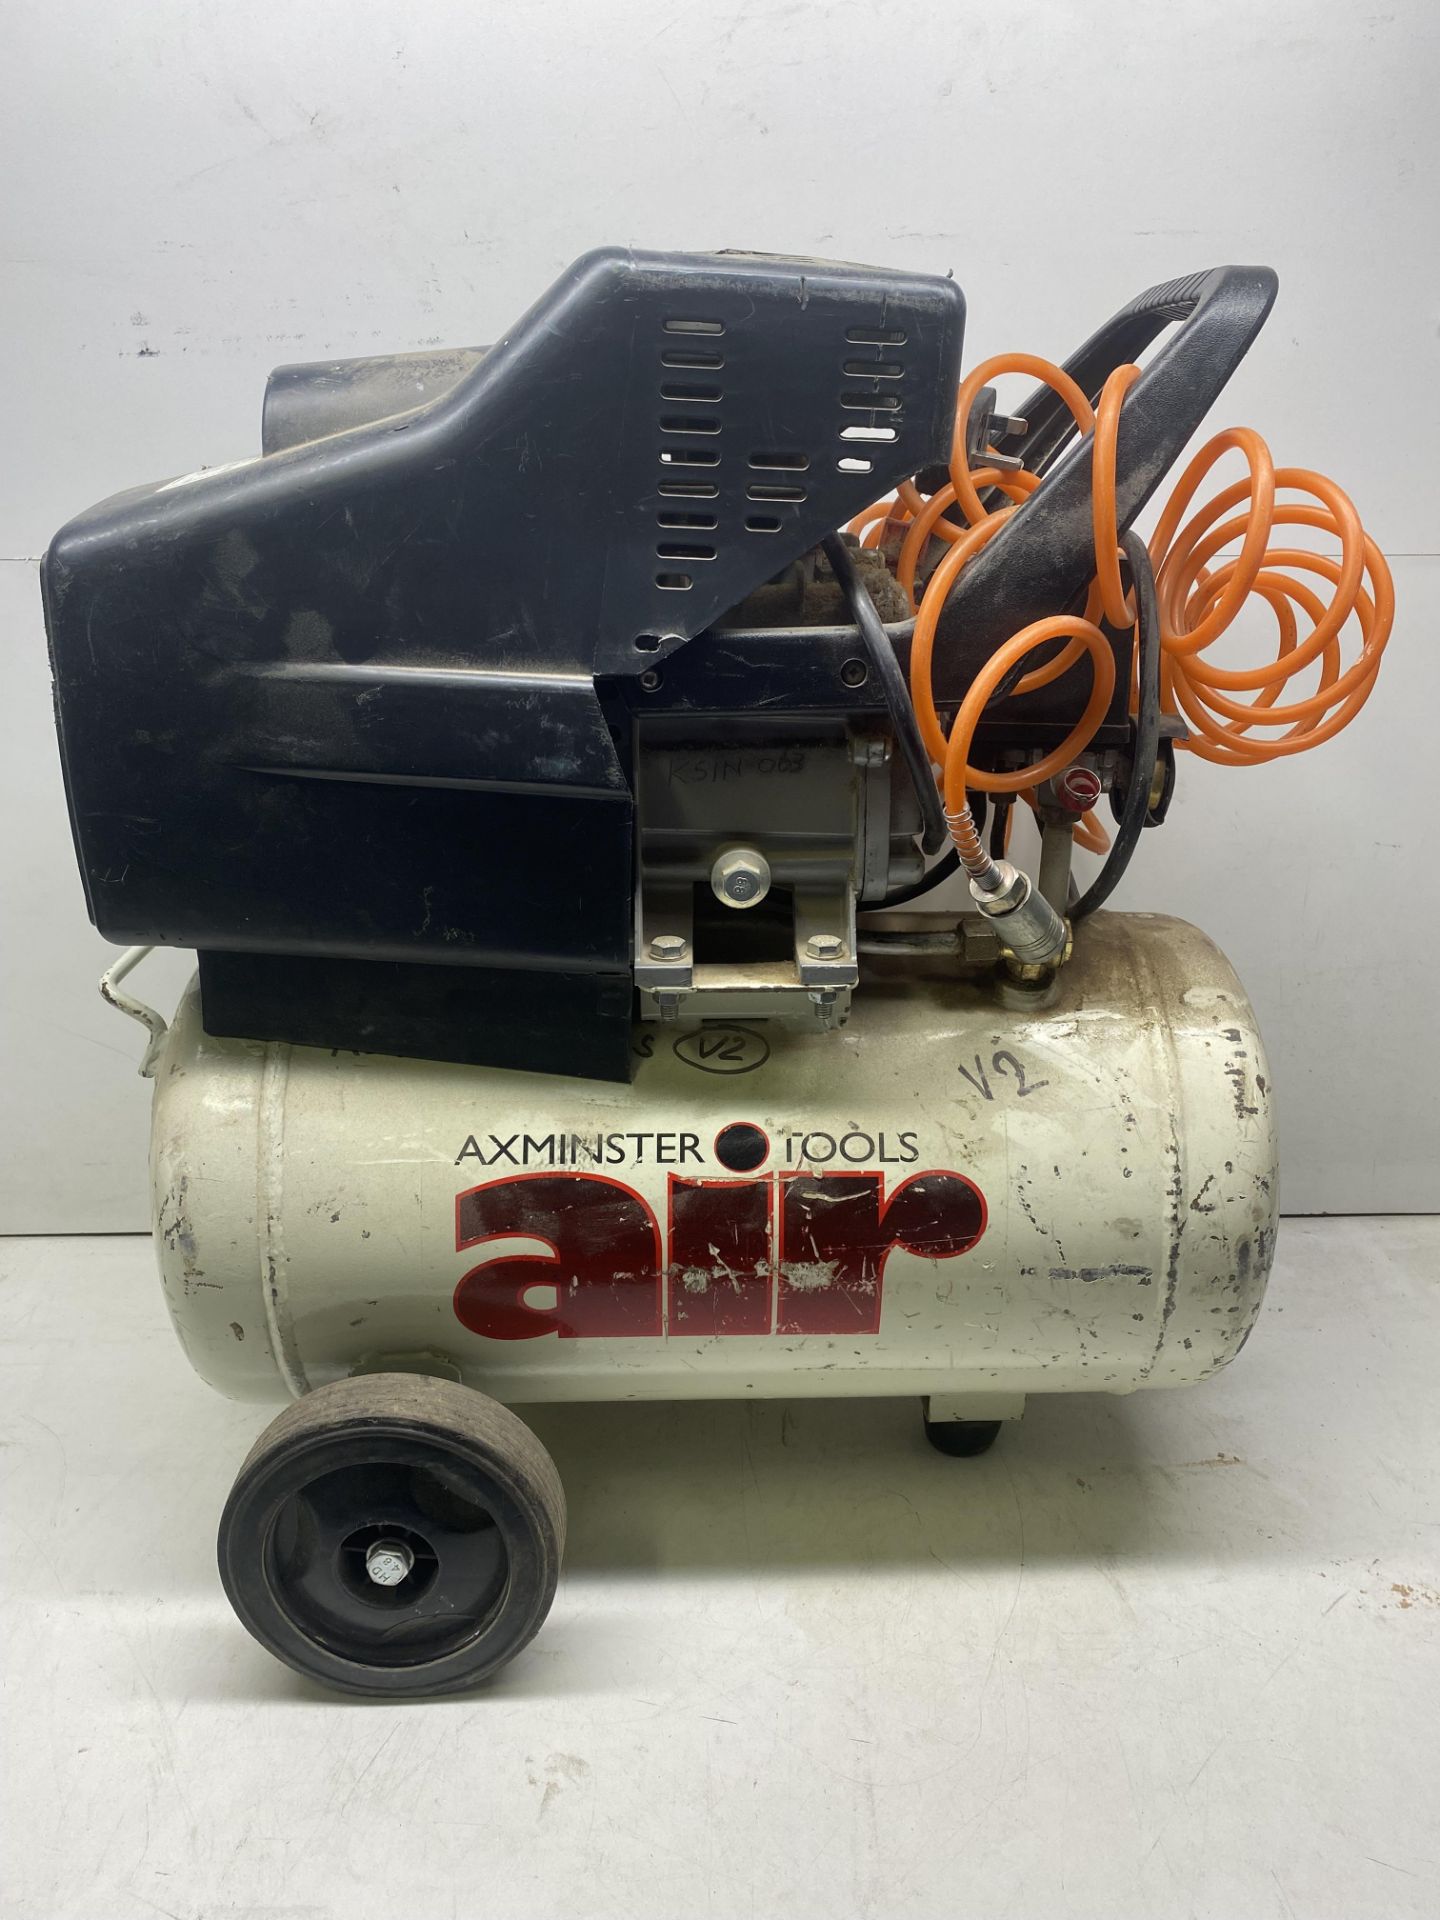 Axminster Tools Awc20Hp Air Compressor - Image 2 of 6